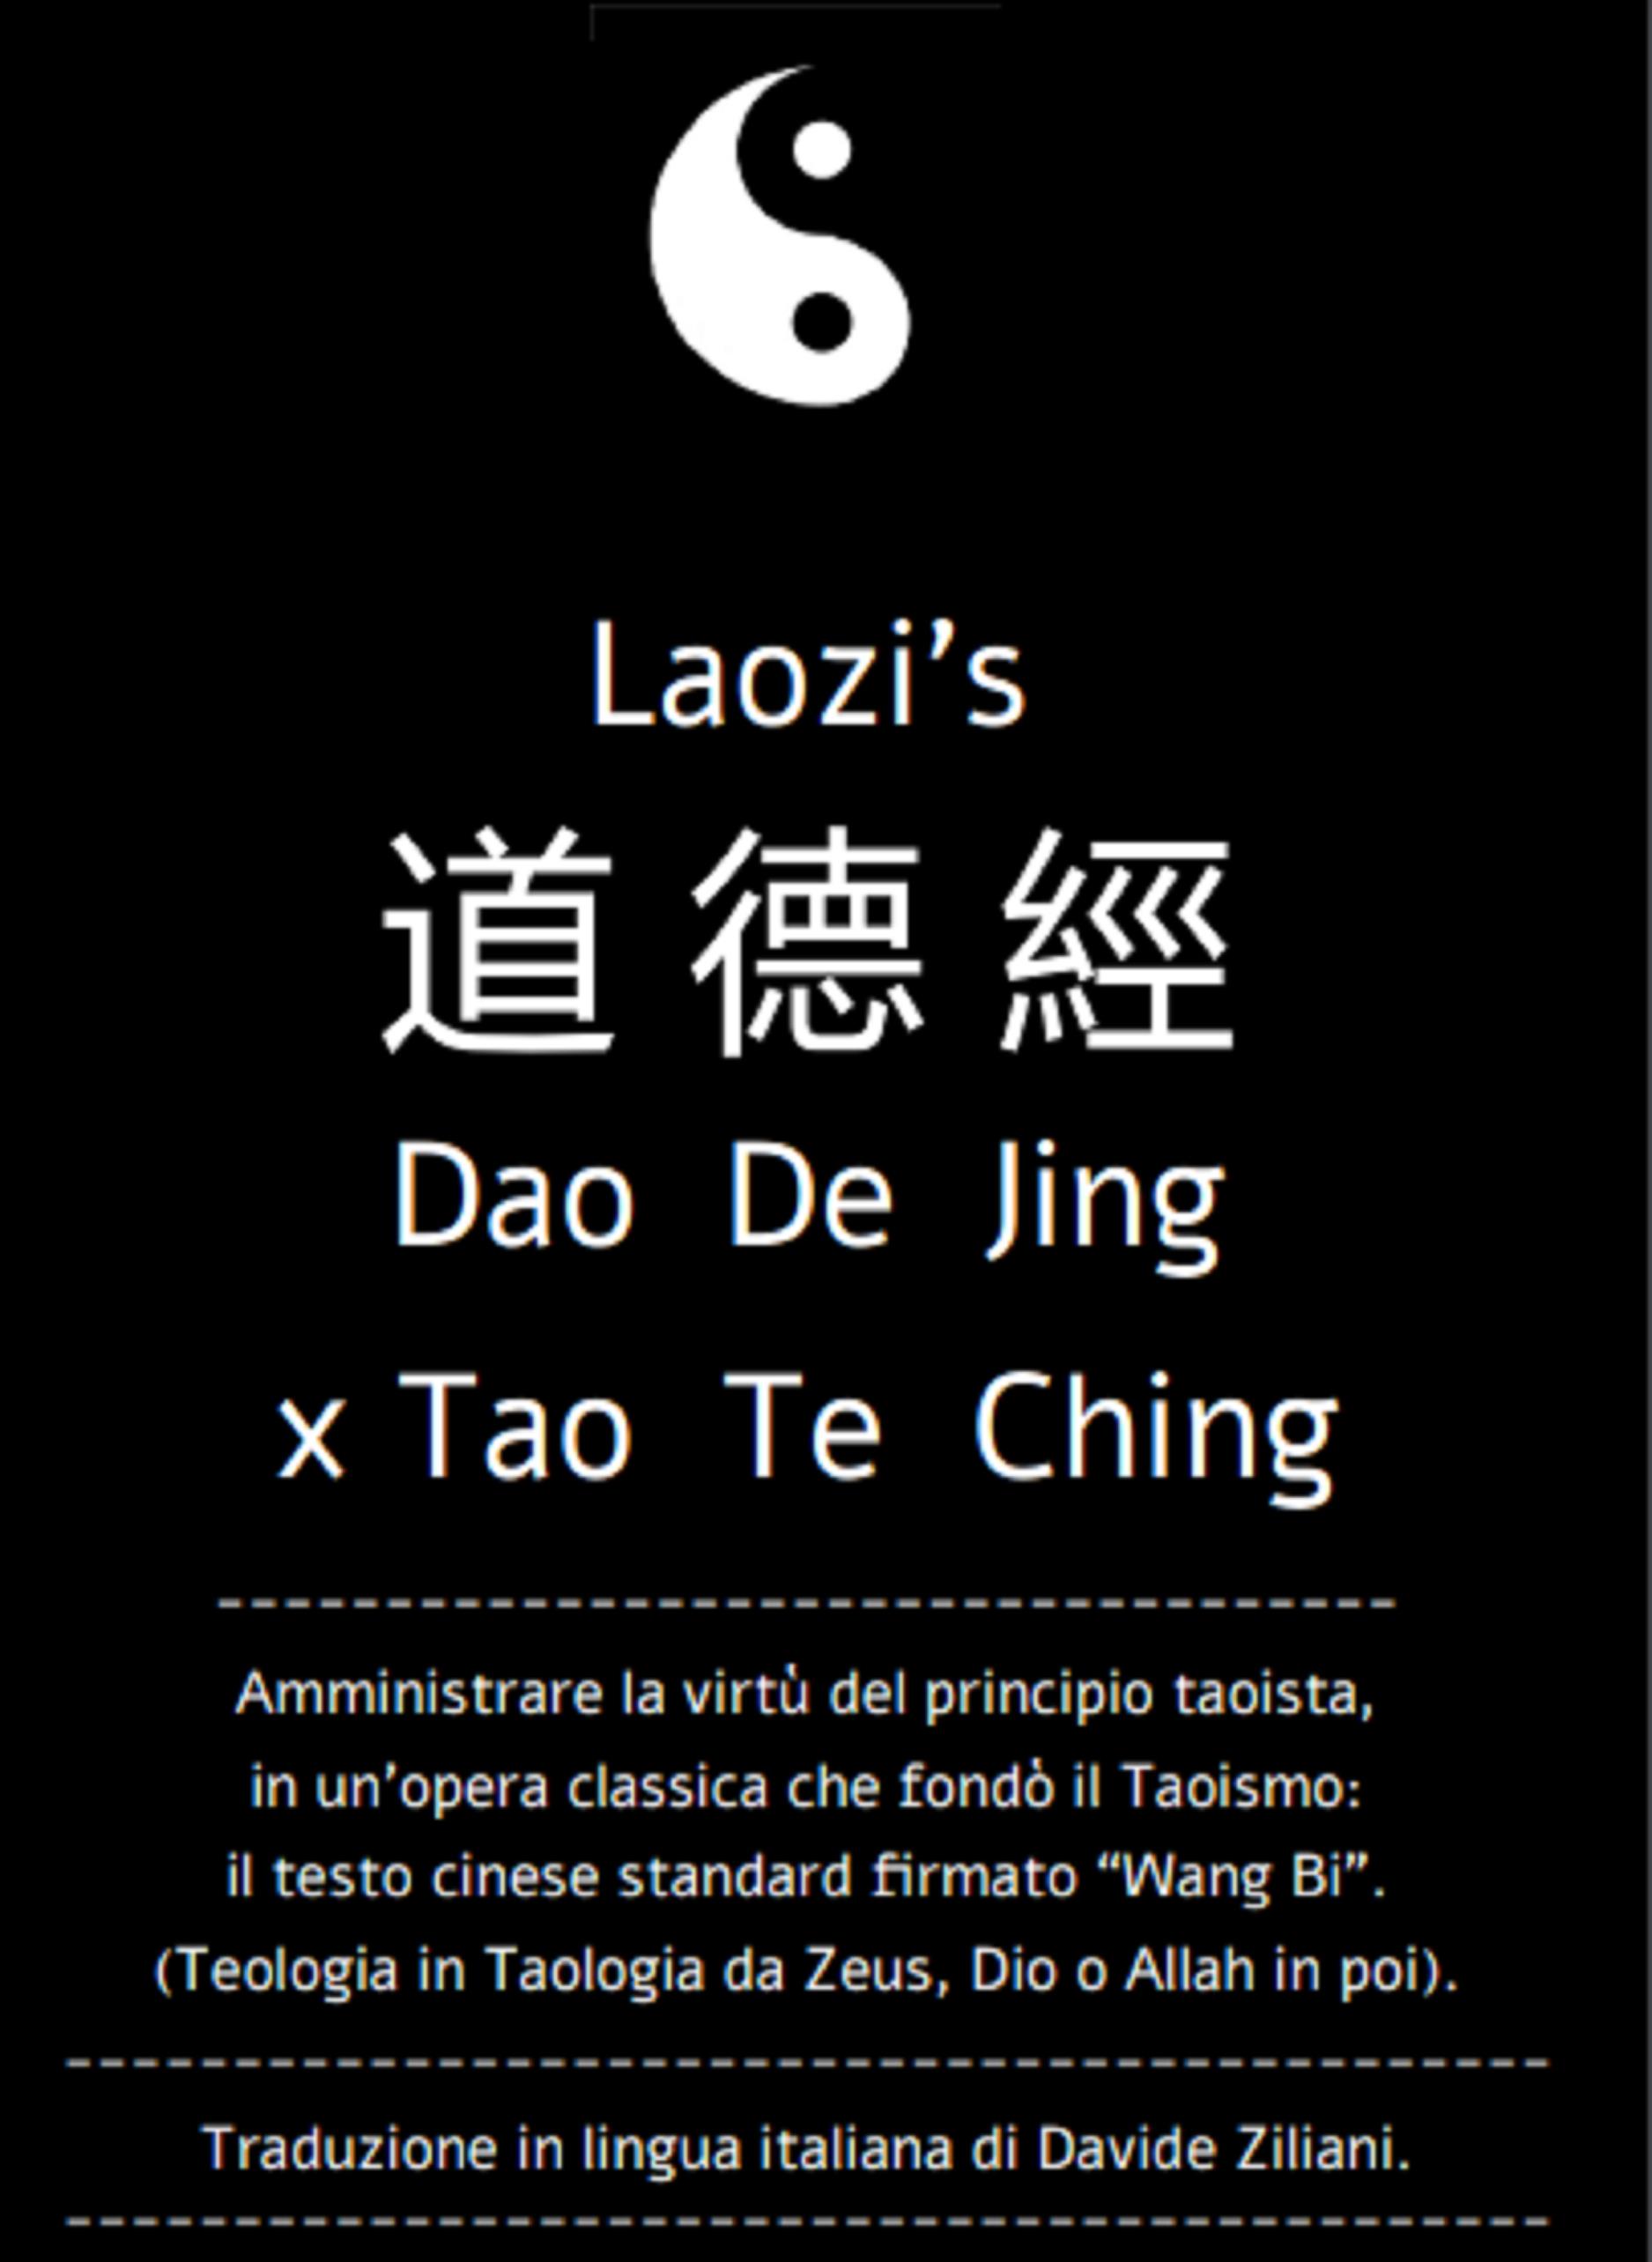 Daodejing, ex Tao Te Ching: da Laozi a Wang Bi. Amministrare la virtù del principio taoista.